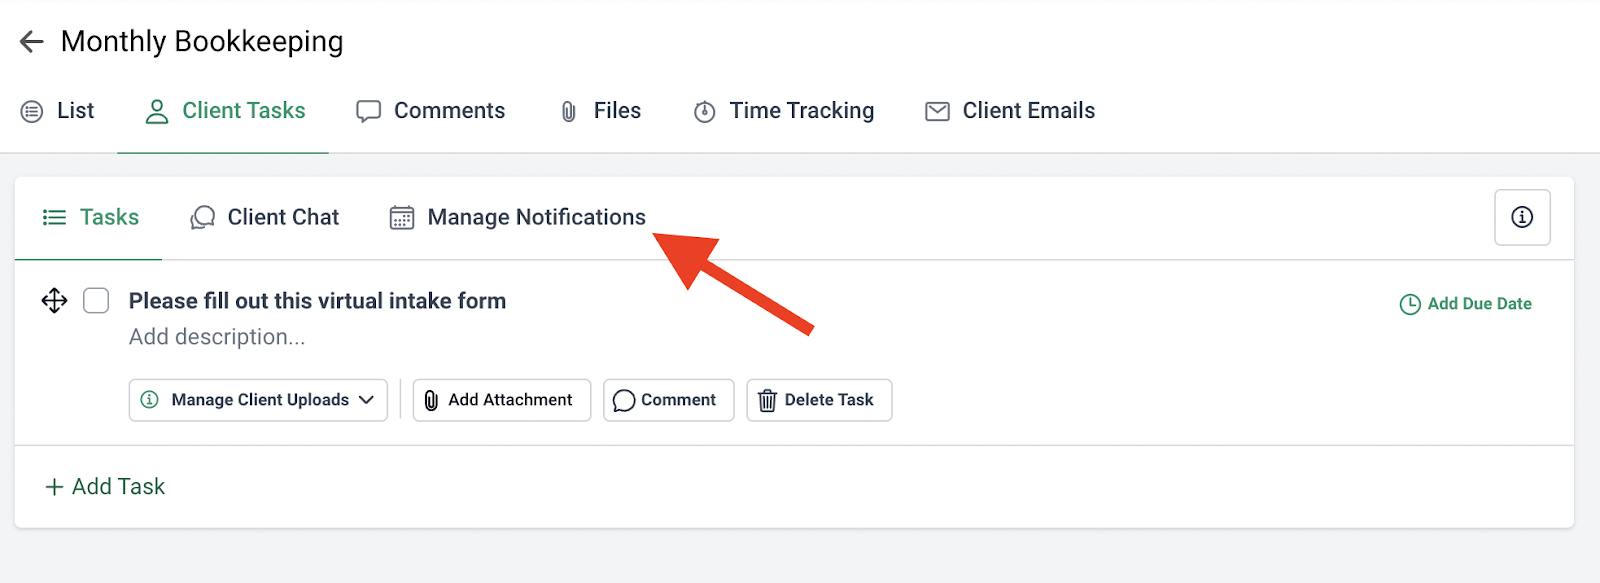 selecting manage notification to set up task reminders